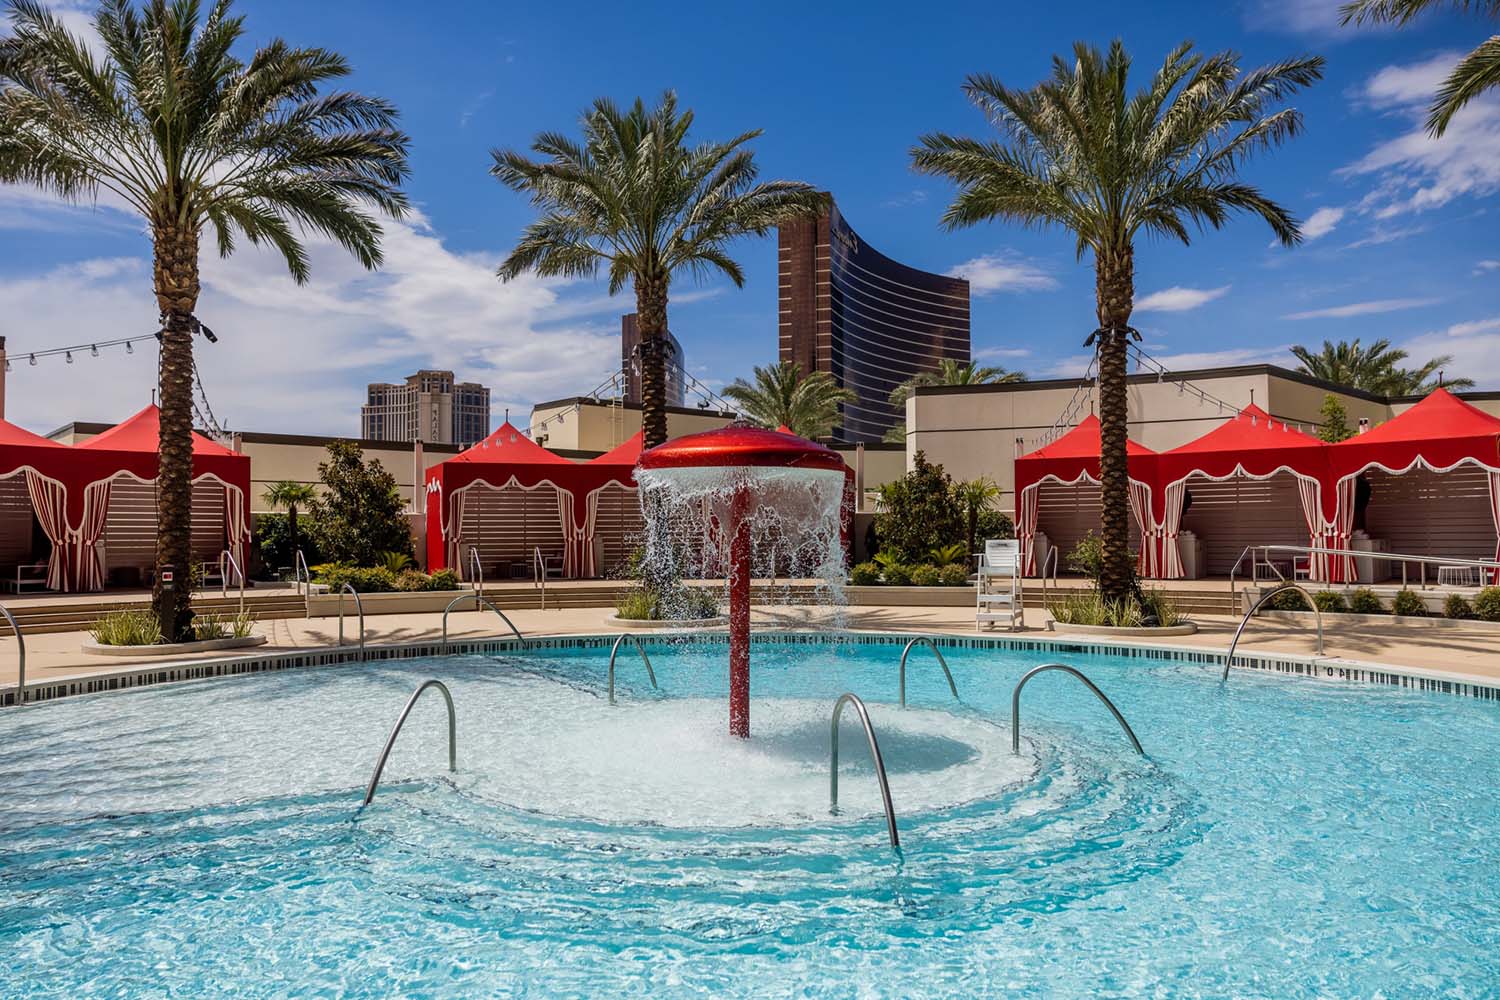 Las Vegas Hotel Spa & Pool, Services & Amenities